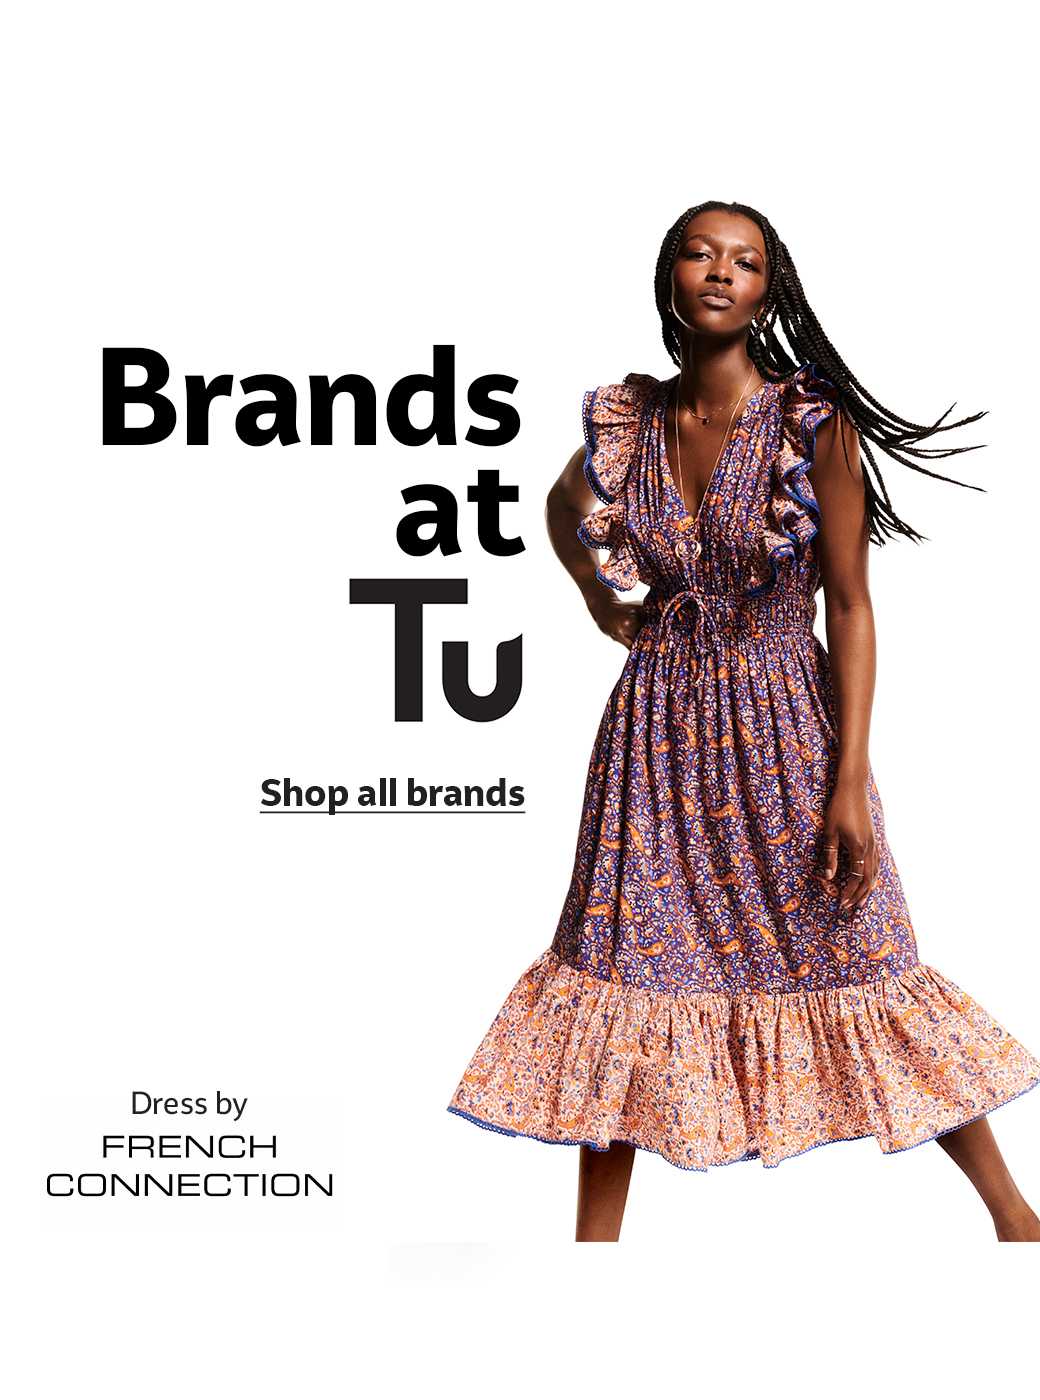 Brands at Tu. Shop all brands.